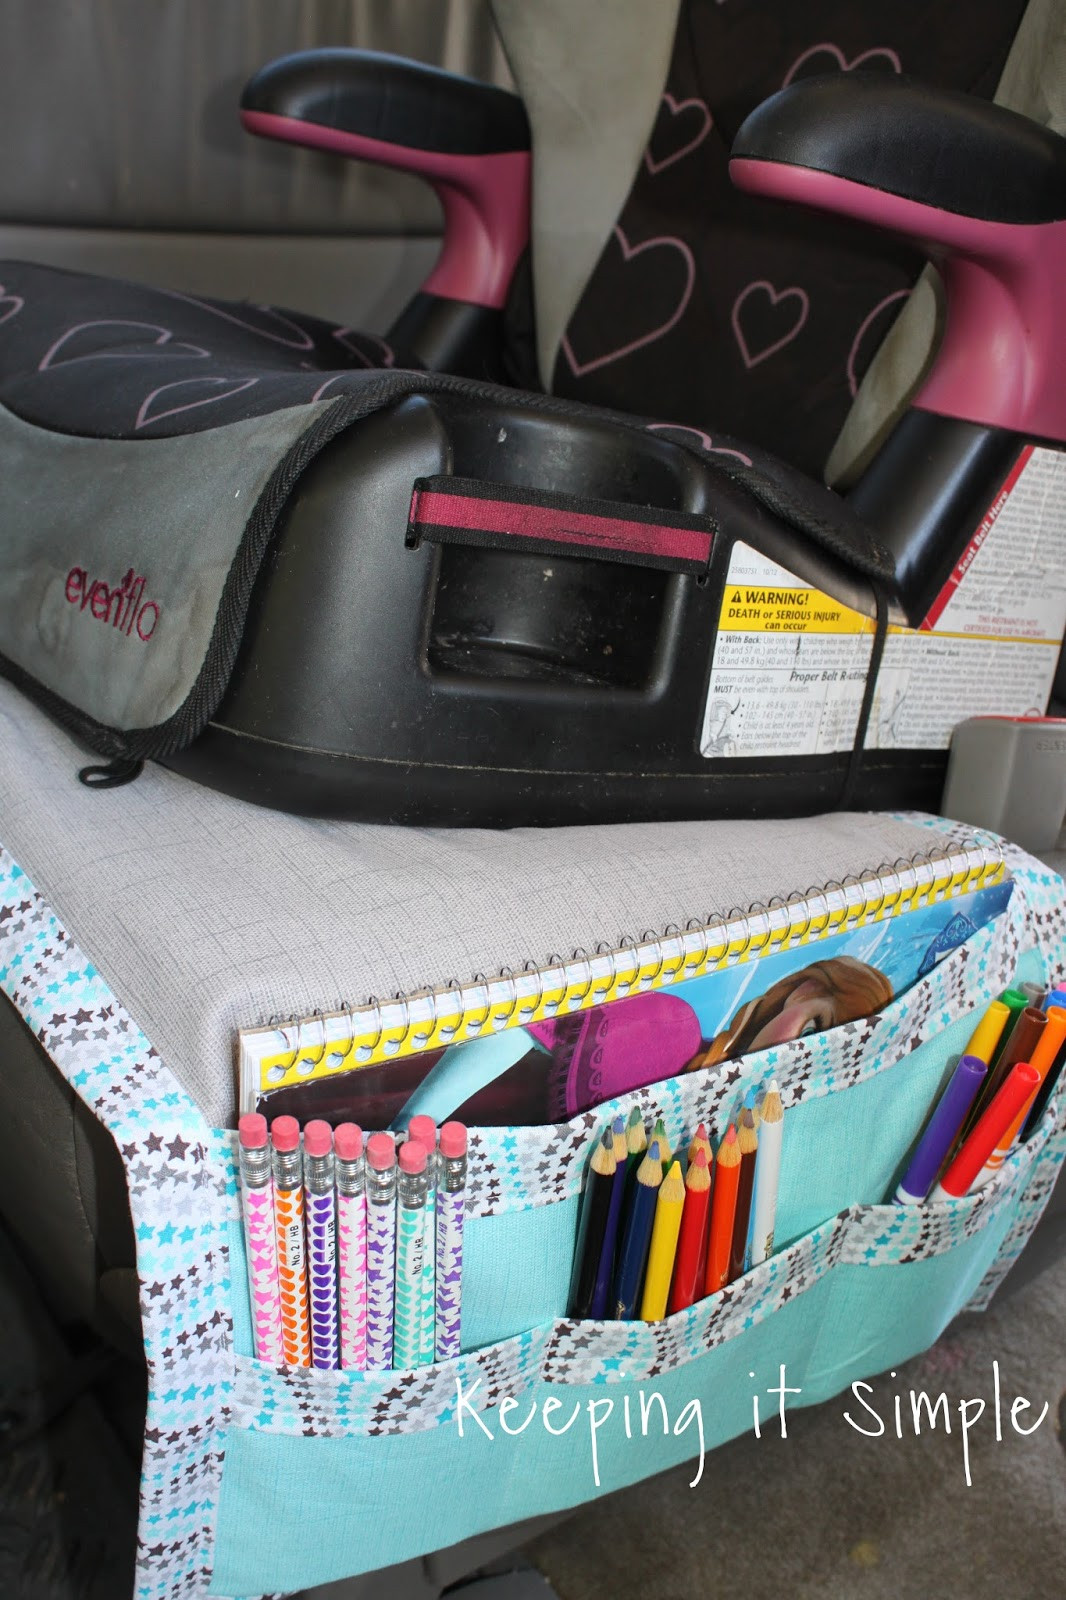 Best ideas about DIY Car Seat Organizer
. Save or Pin Keeping it Simple DIY Car Seat Organizer for Kids Snacks Now.